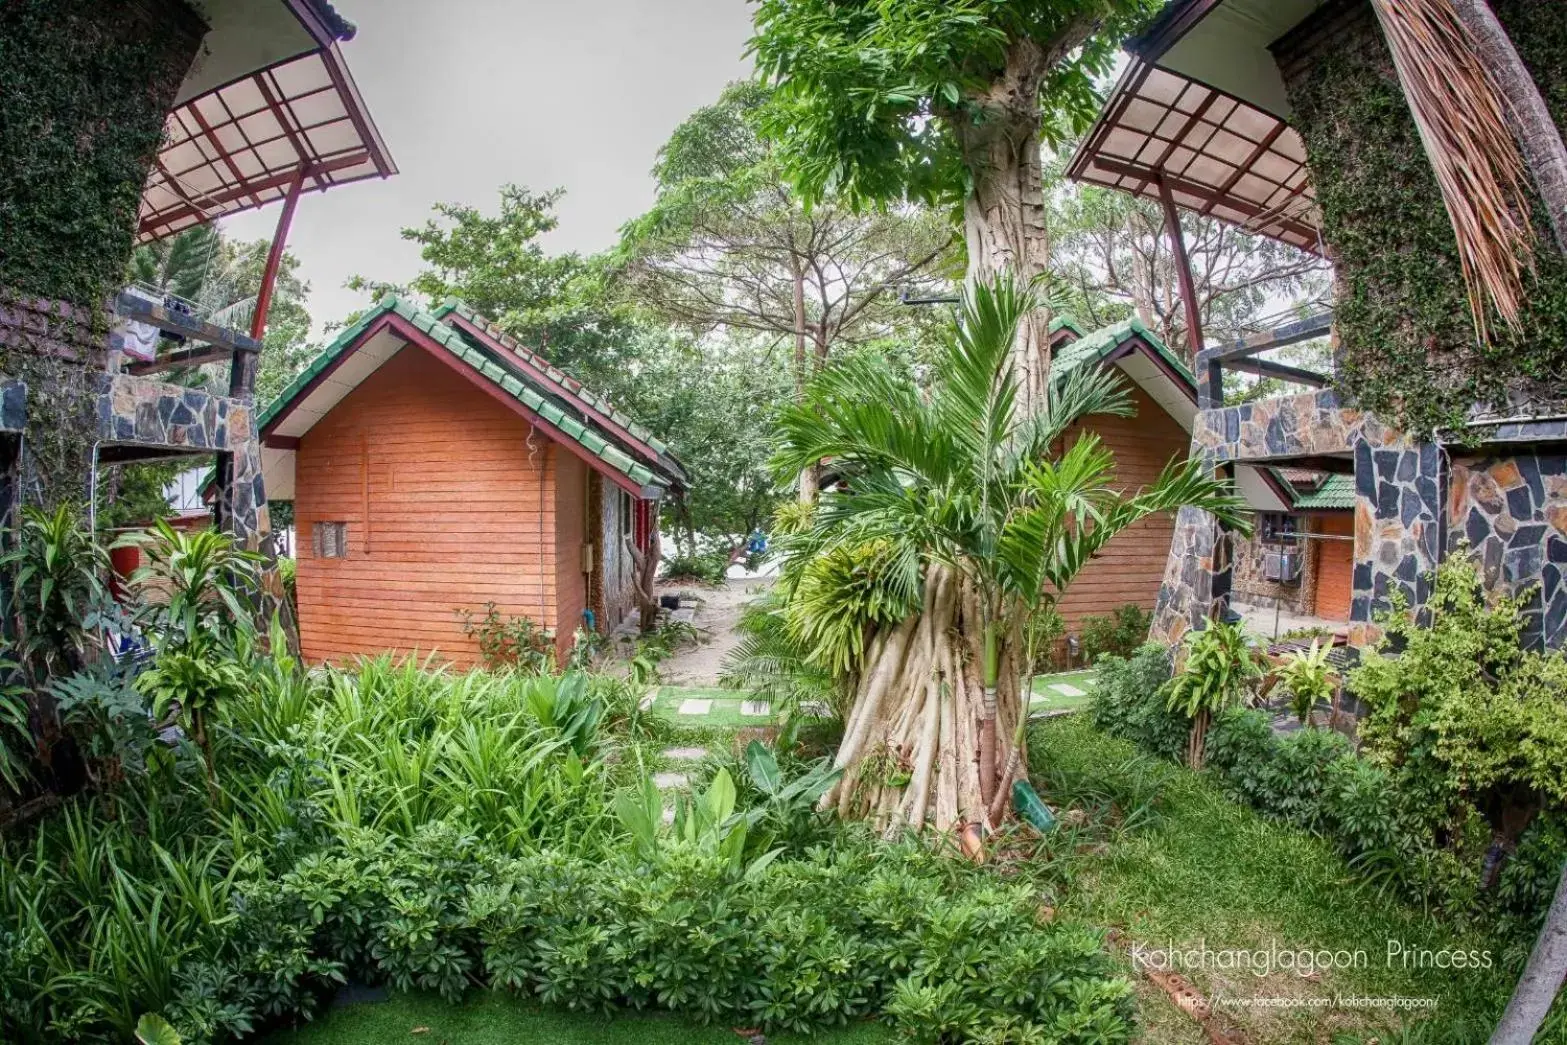 Garden view, Property Building in Koh Chang Lagoon Princess